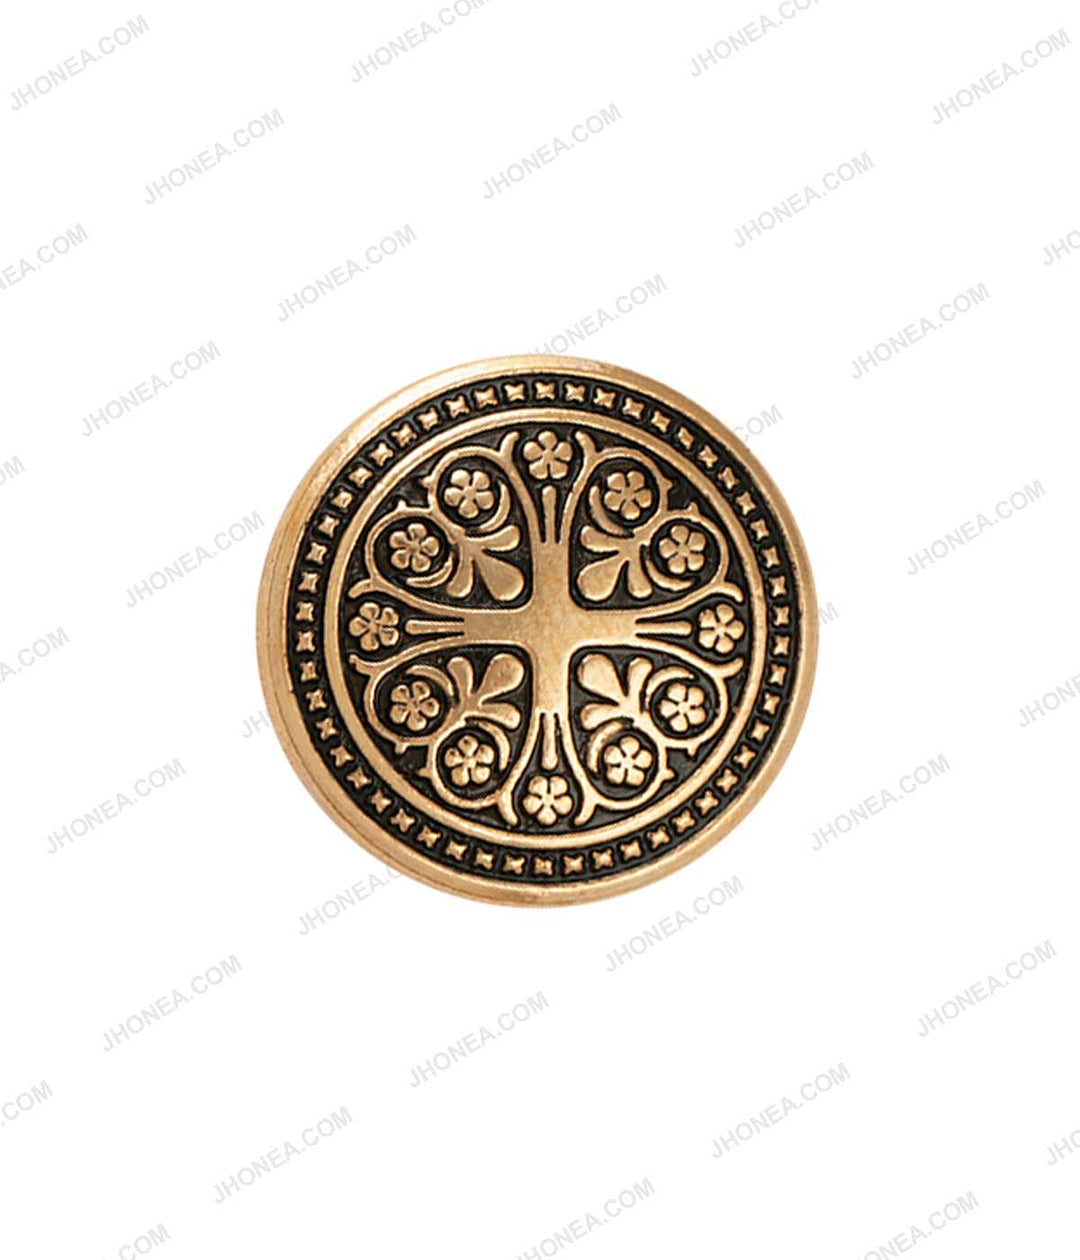 Antique Gold Color Exquisite Antique Medieval Design Sherwani Button